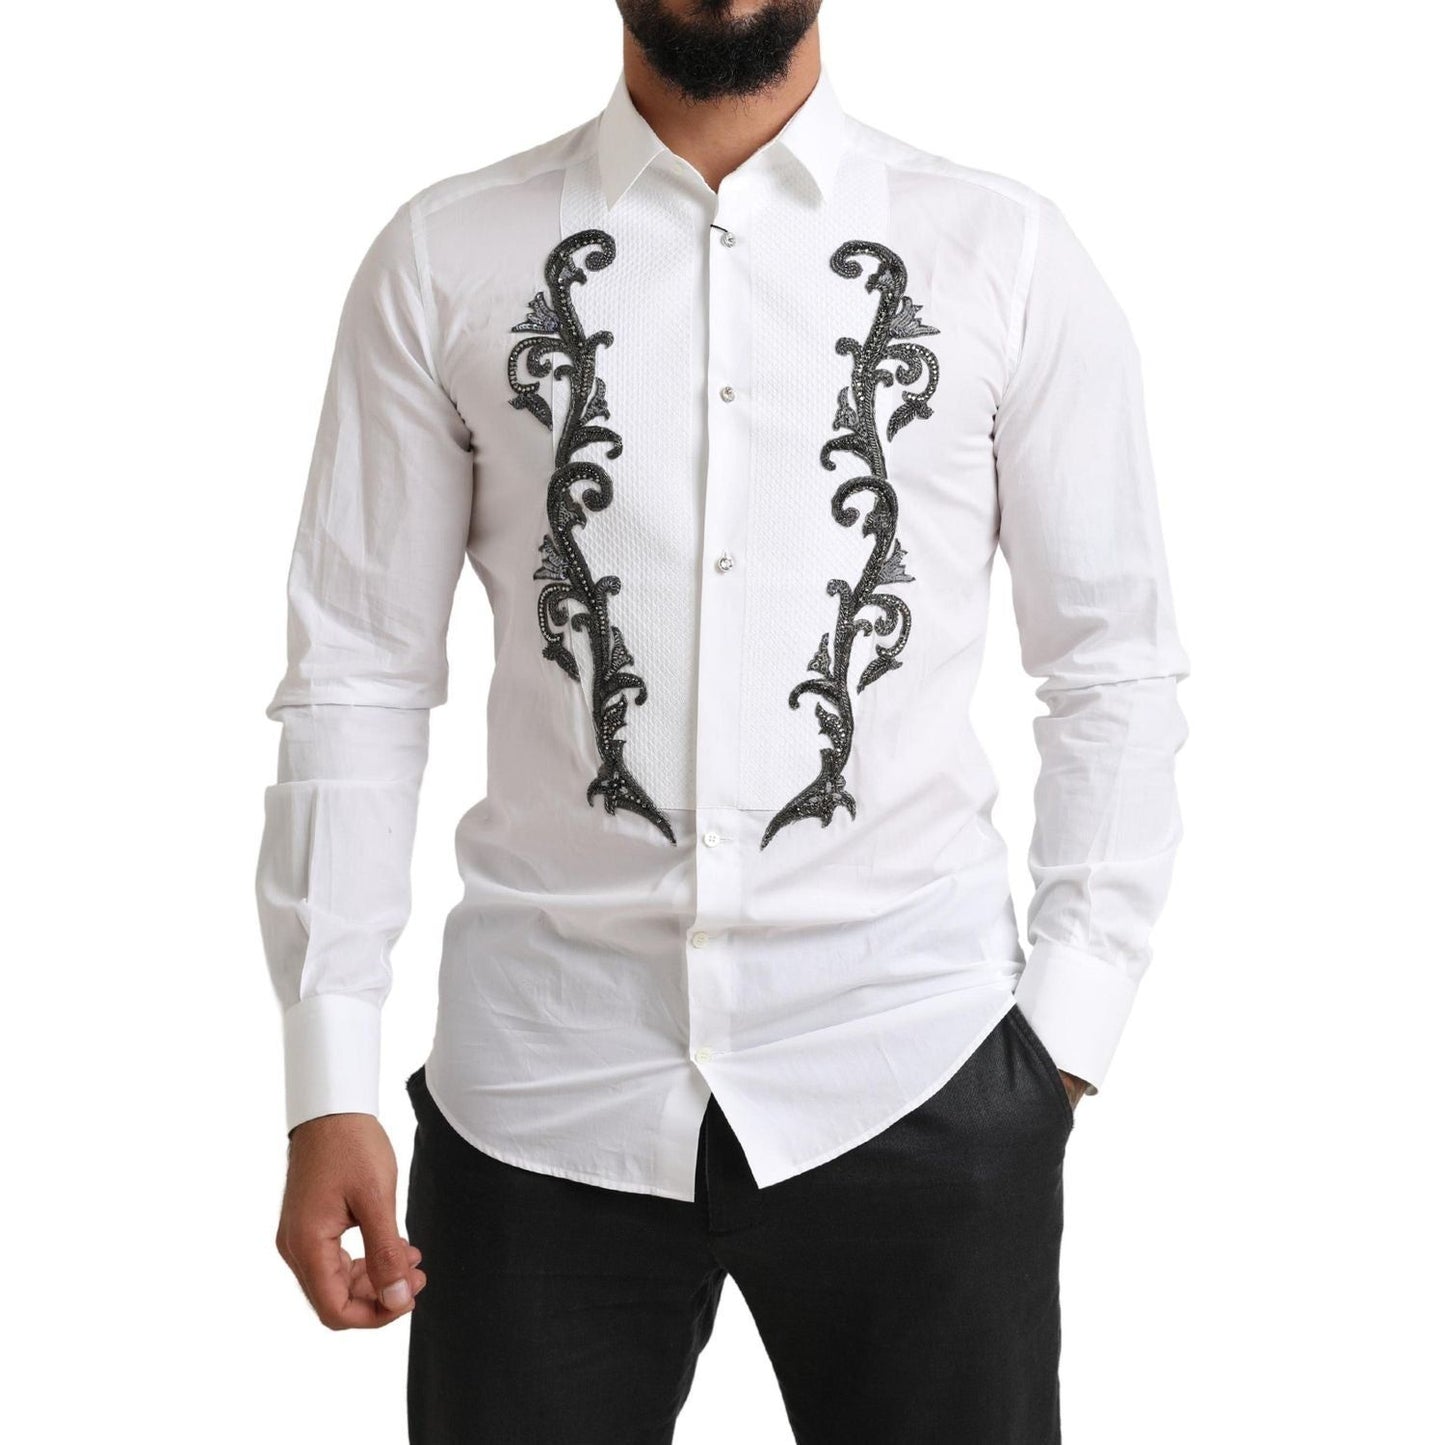 Dolce & Gabbana Italian Designer Slim Fit Tuxedo Shirt white-tuxedo-slim-fit-baroque-shirt 465A9597-9f170e6c-9f3.jpg